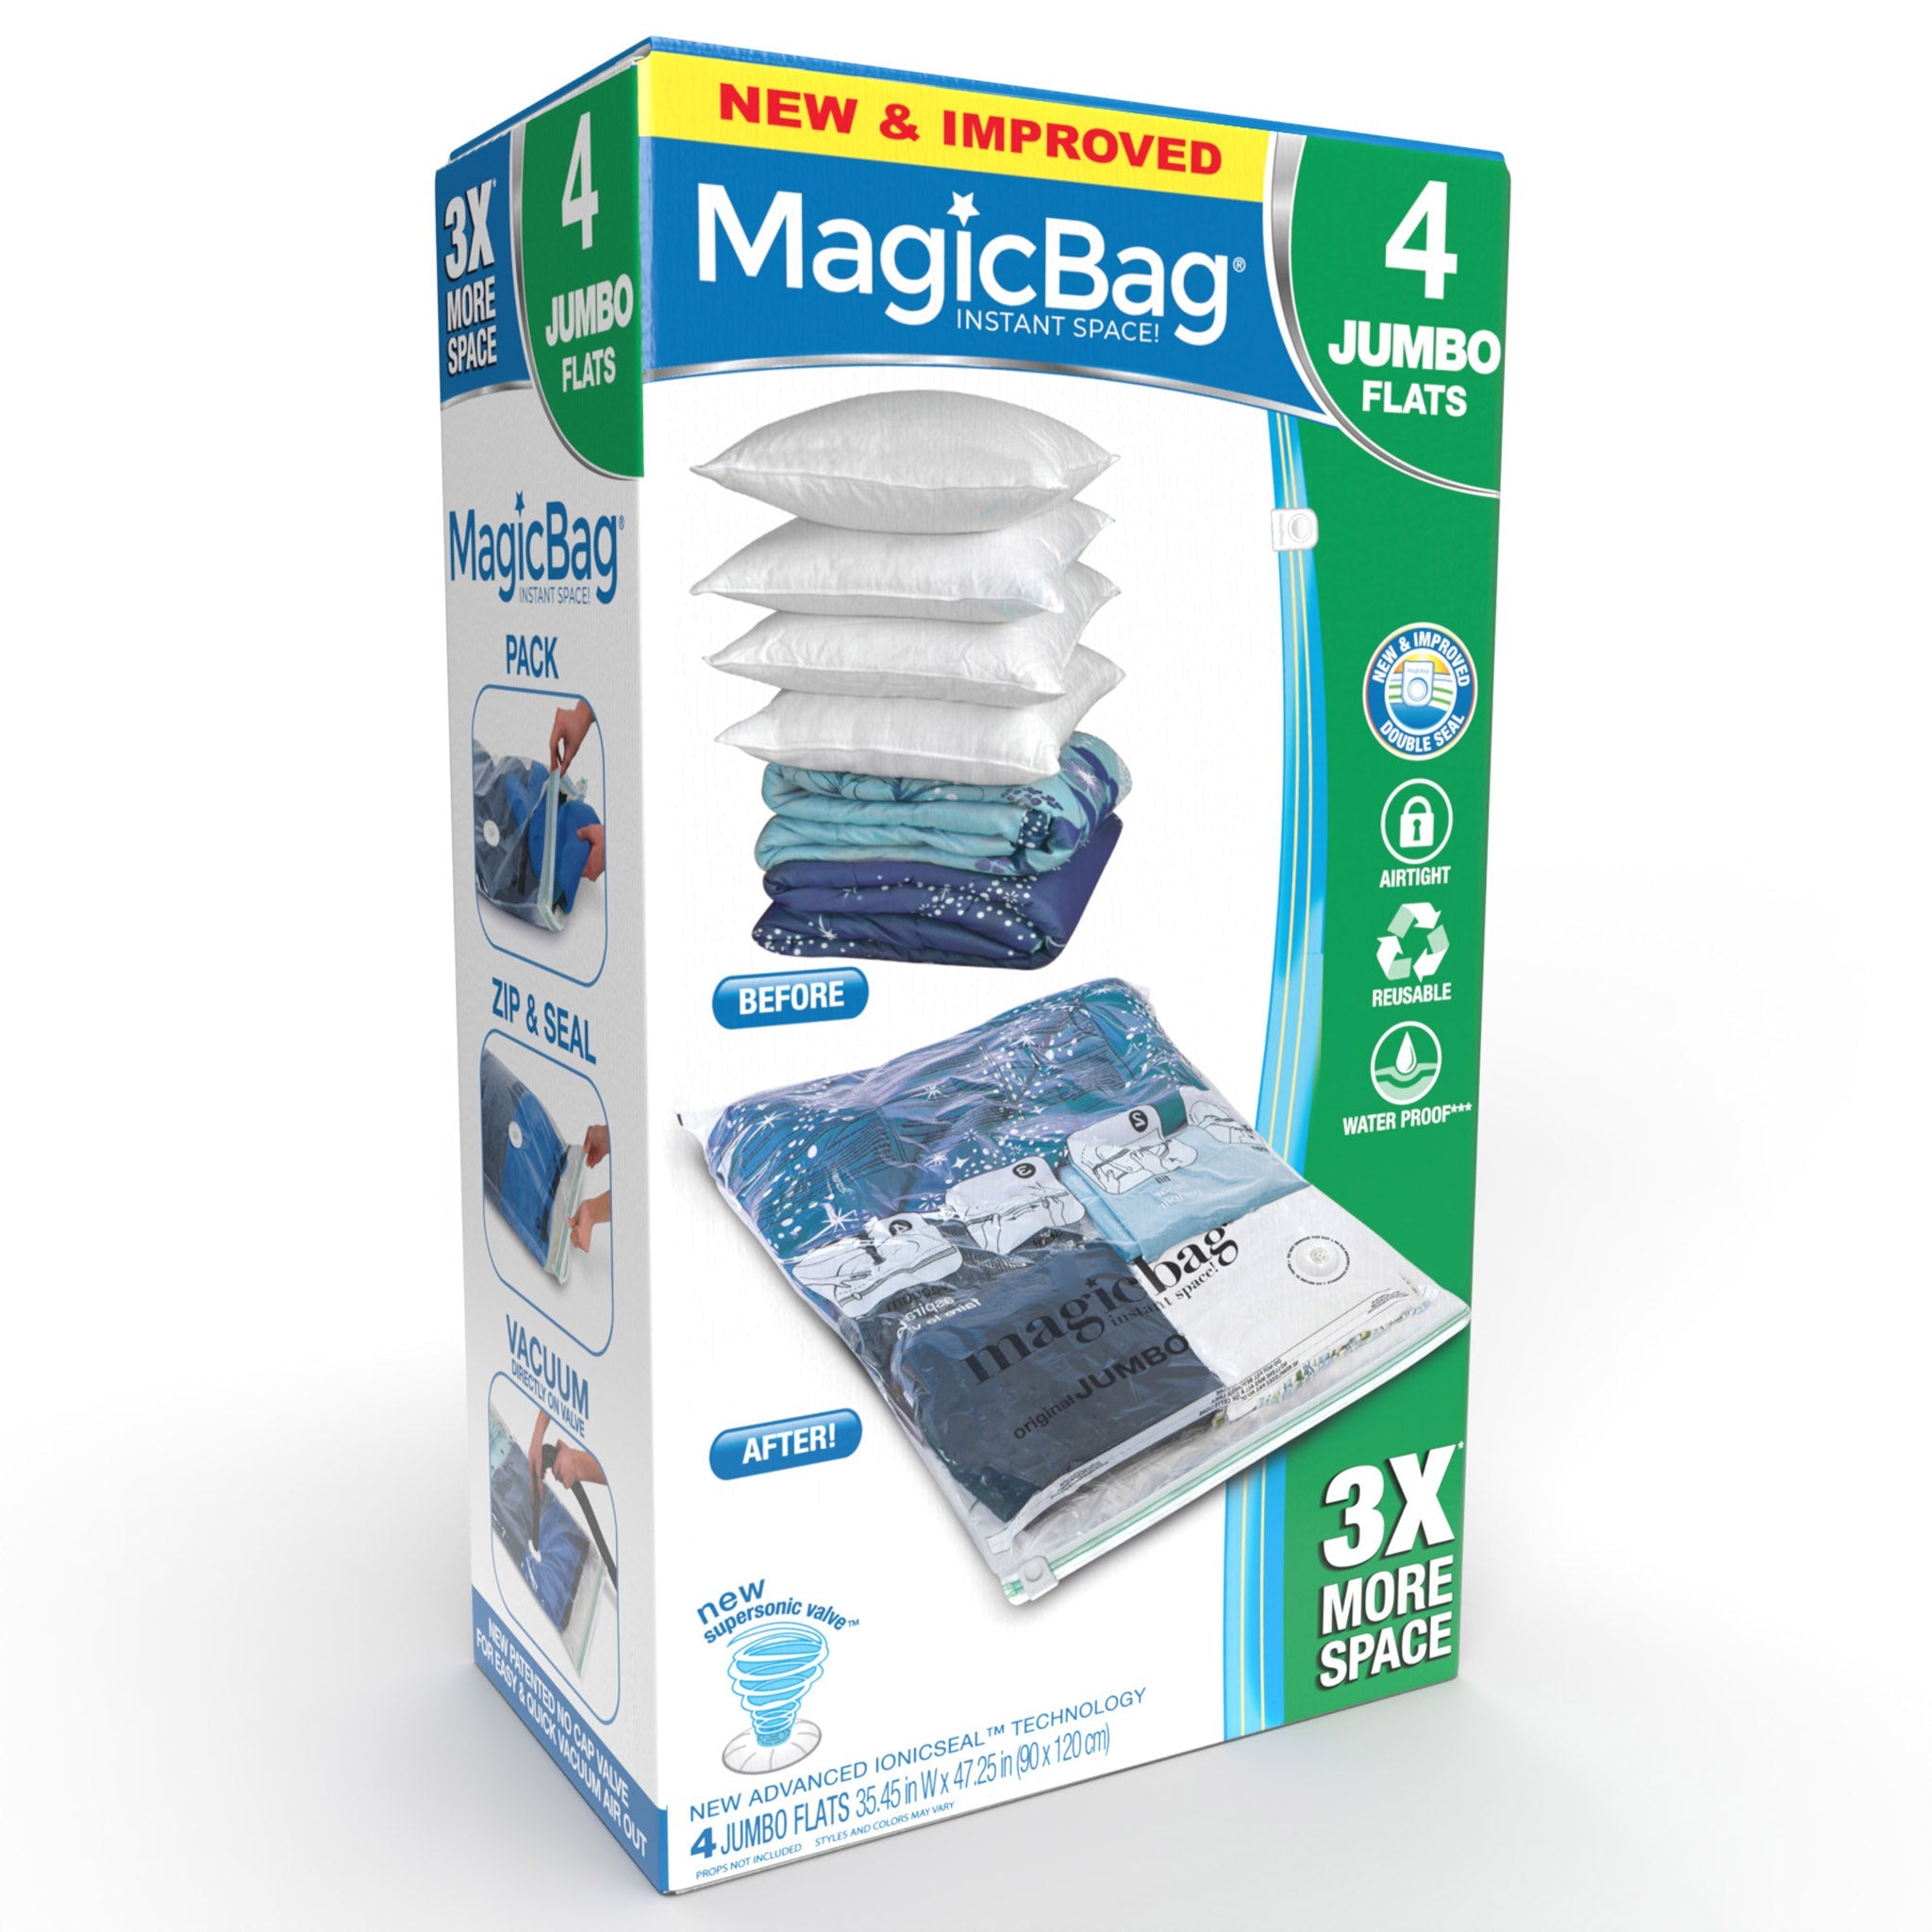 Smart Storage Vacuum Storage Bags, 16 Pack Space Saver Bags for